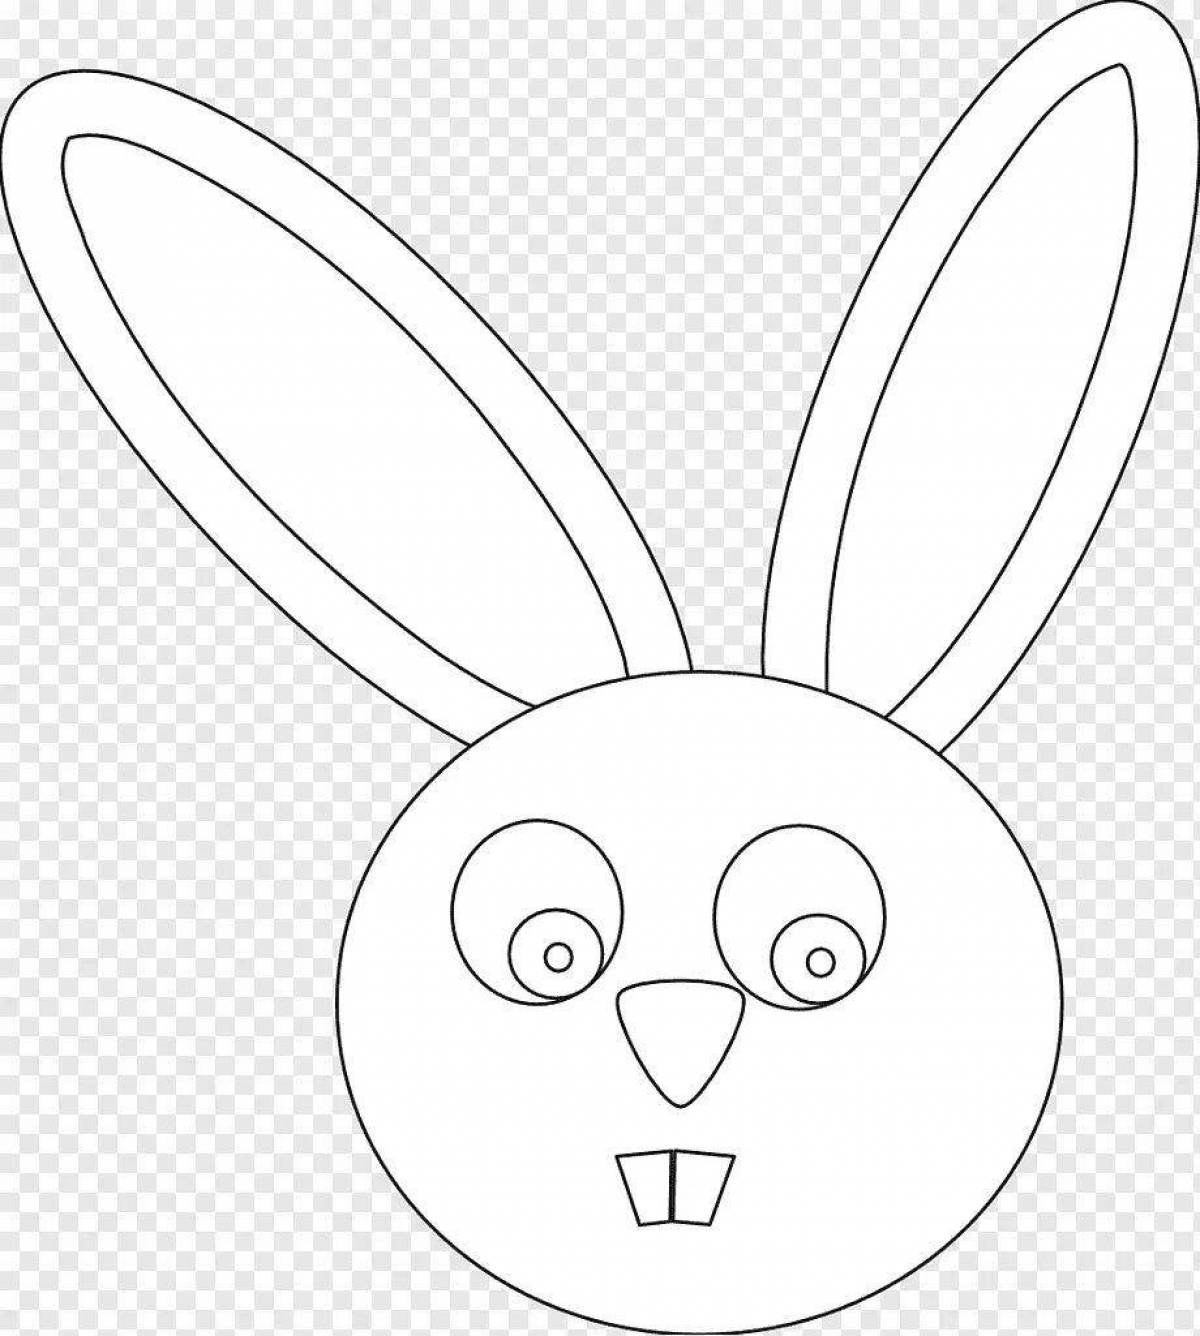 Fluffy rabbit head coloring book